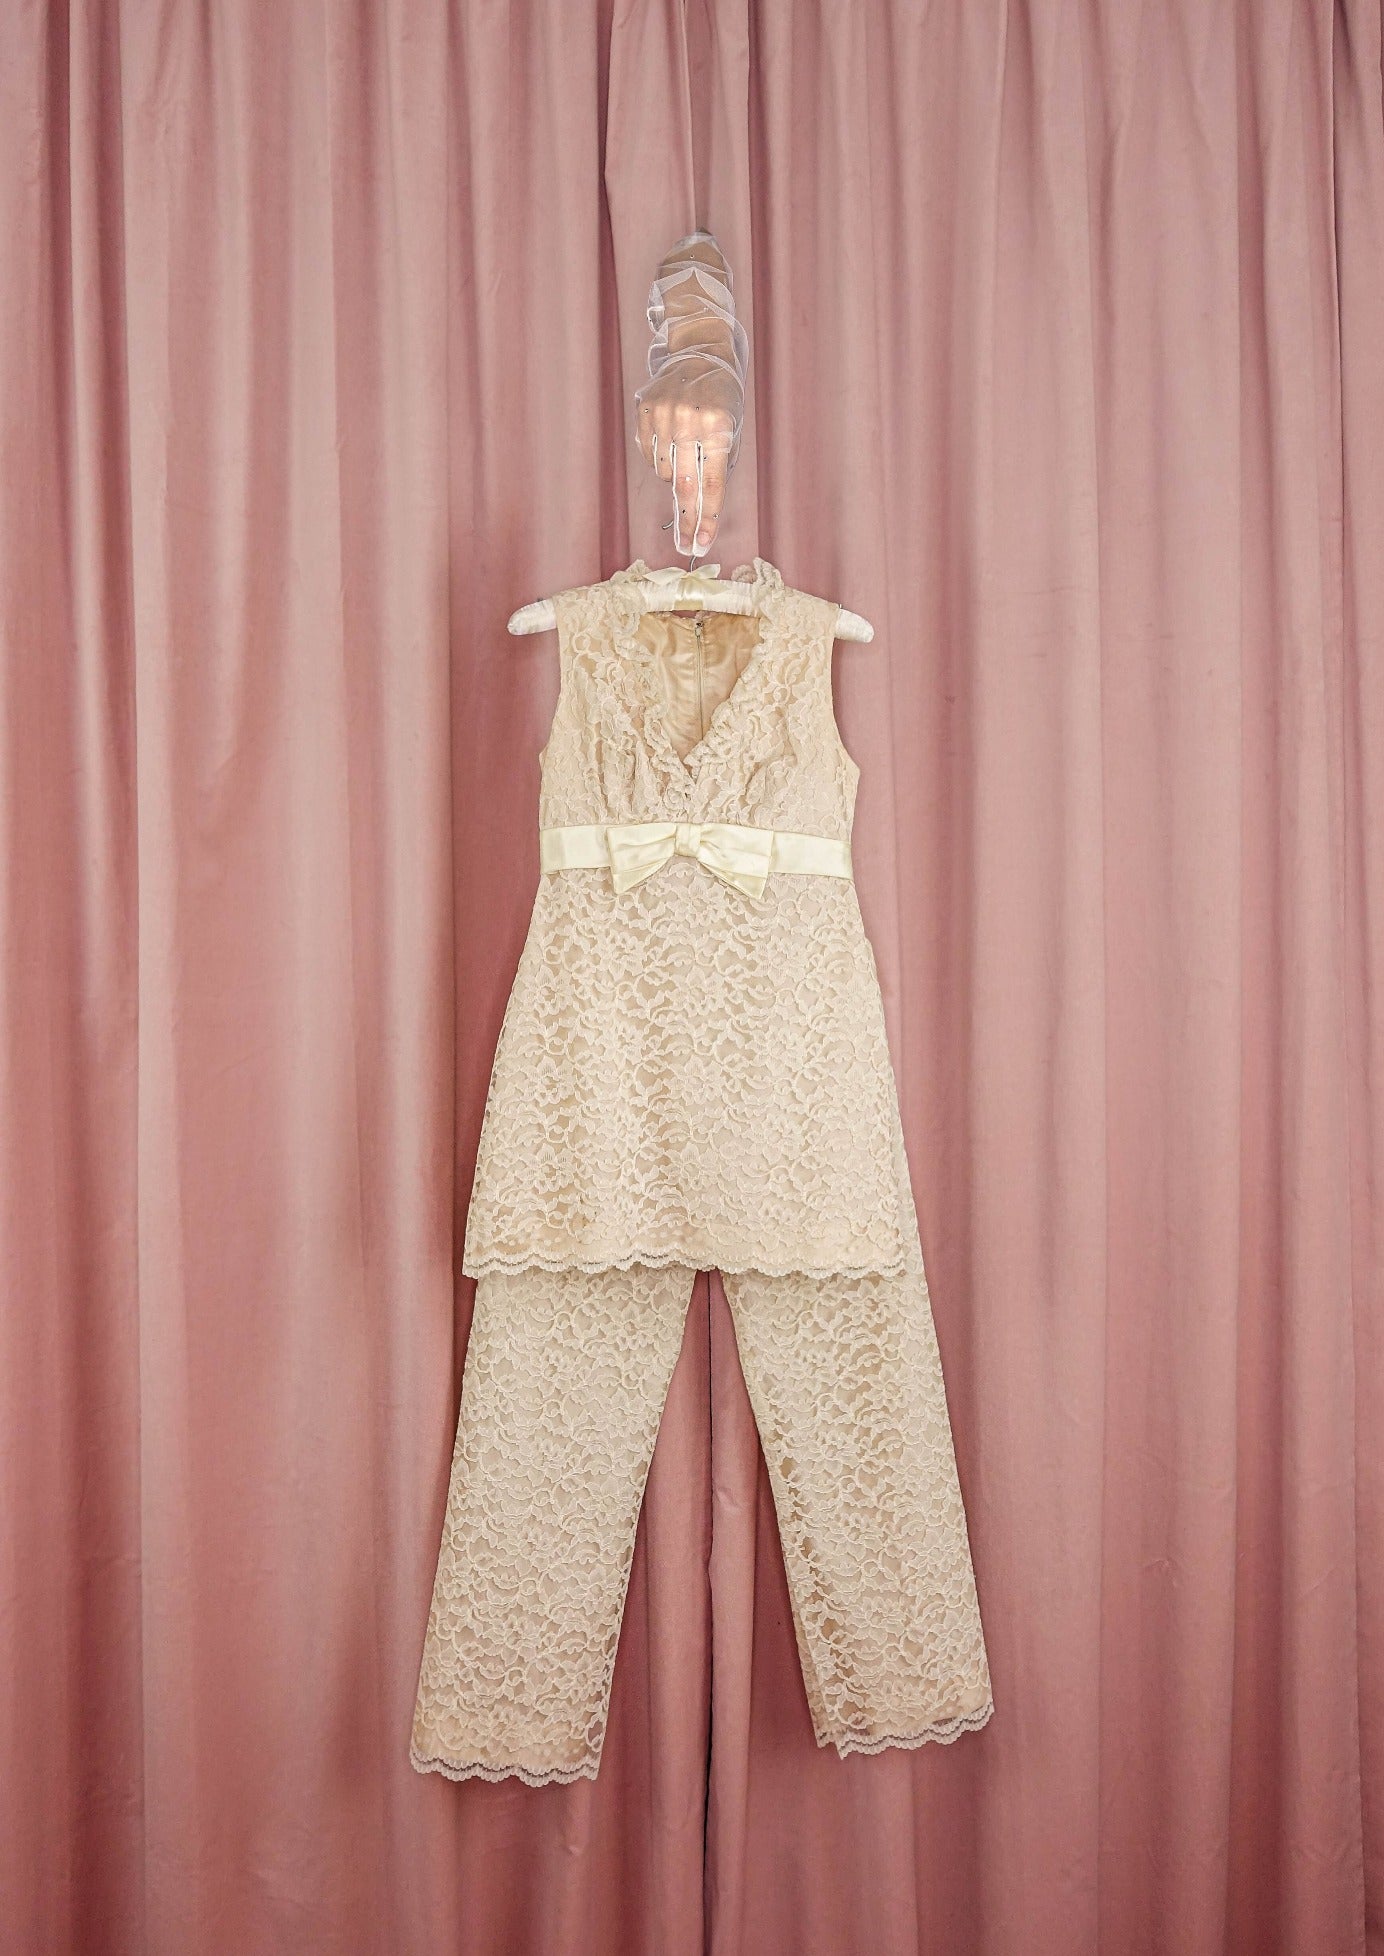 1960s Lace Tunic and Pants Set